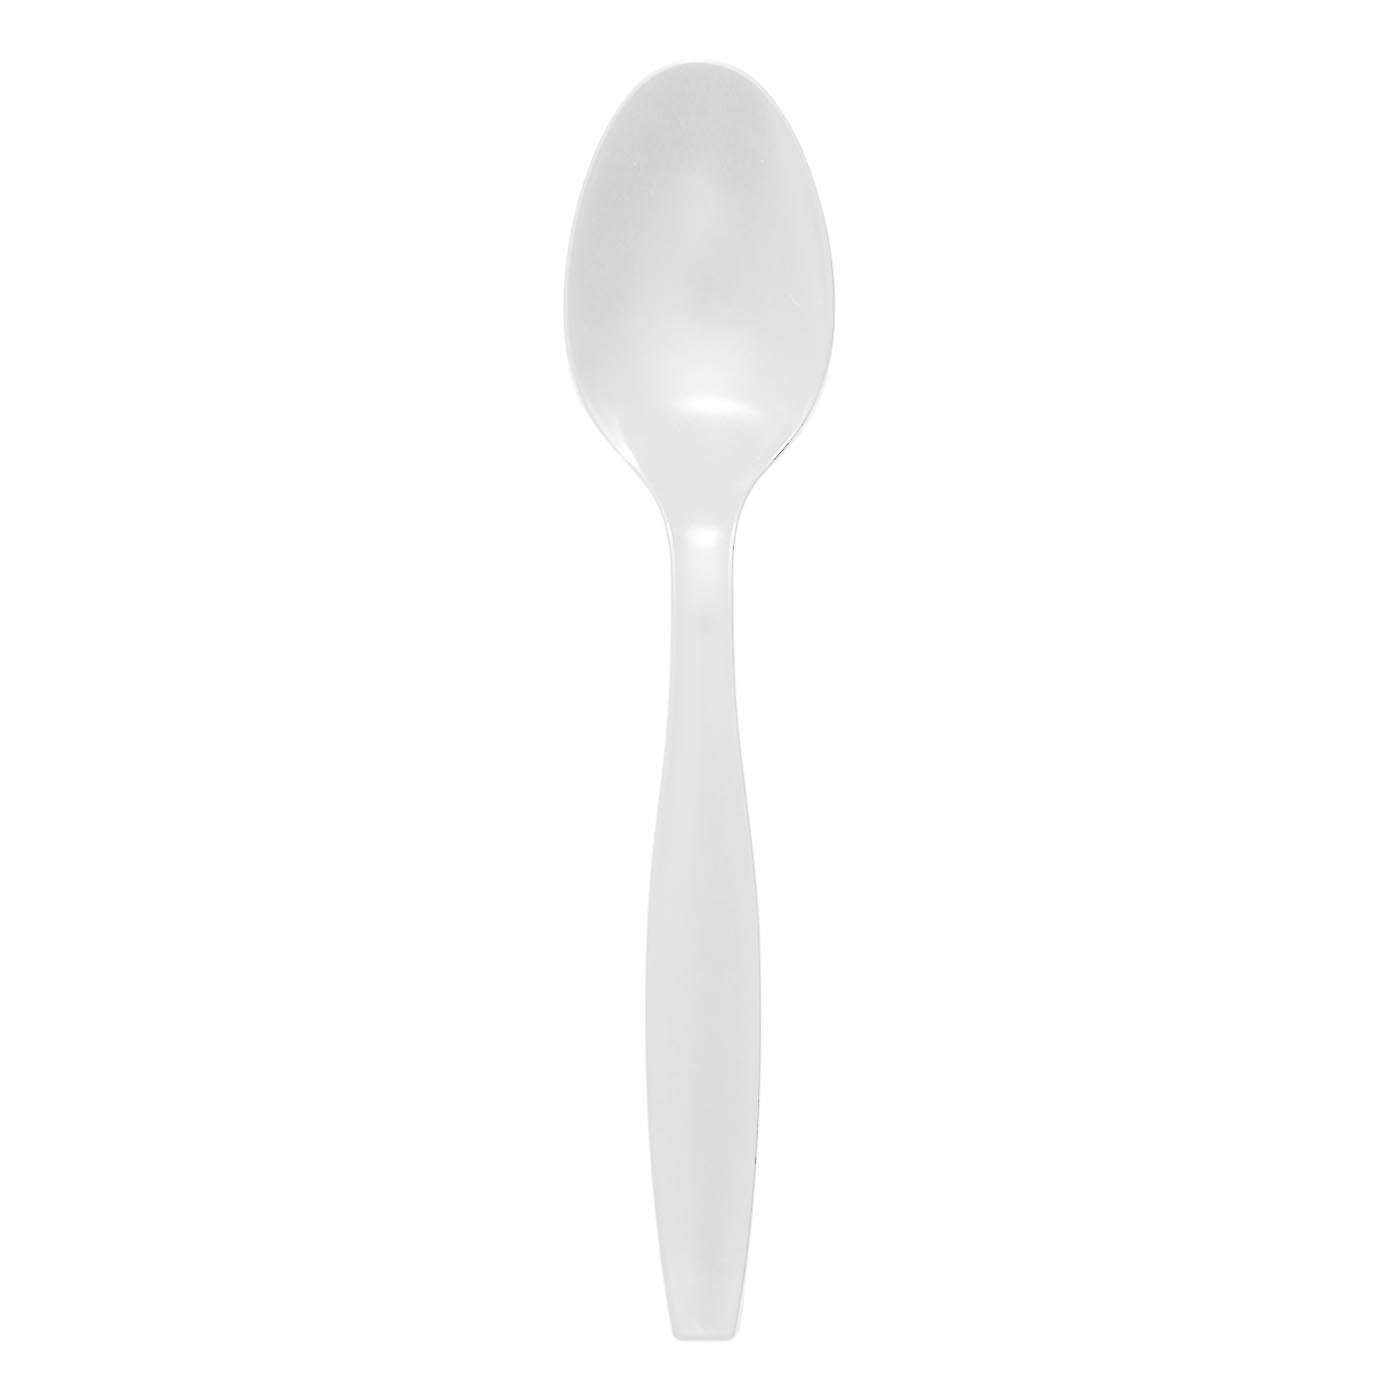 Wholesale disposable bulk plastic spoons Offering Wide Range of